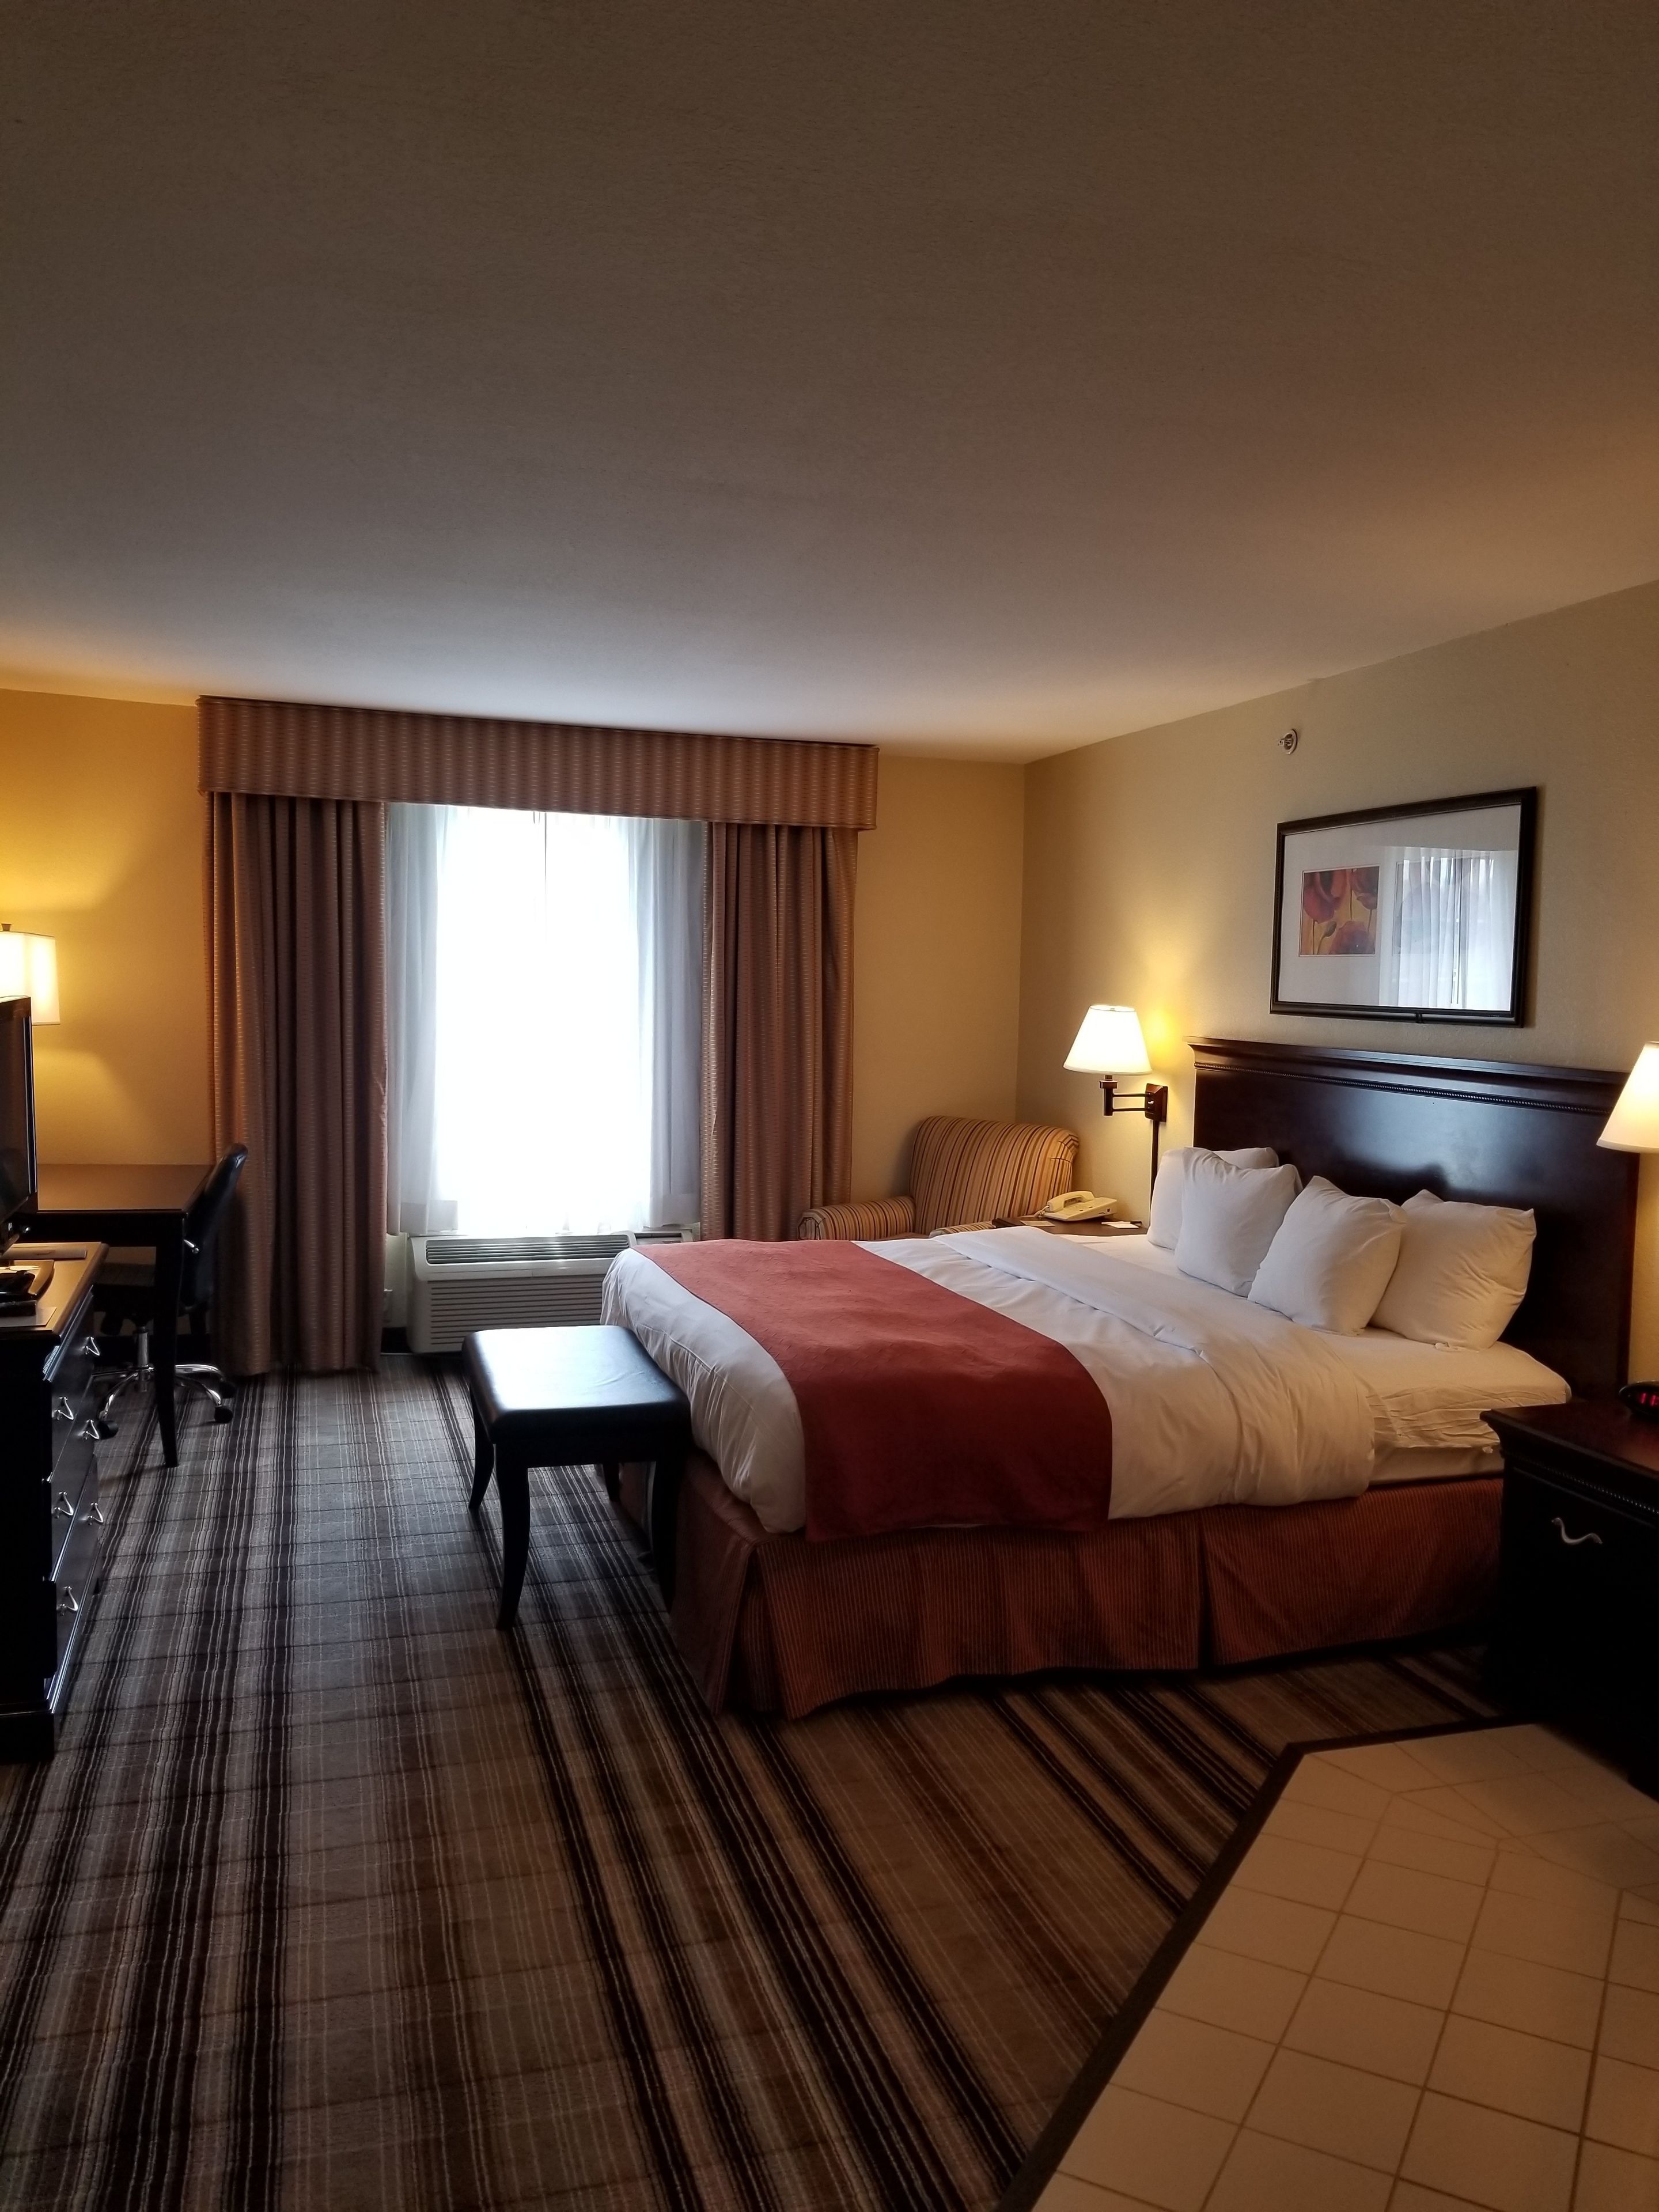 Country Inn & Suites by Radisson, Lexington, VA